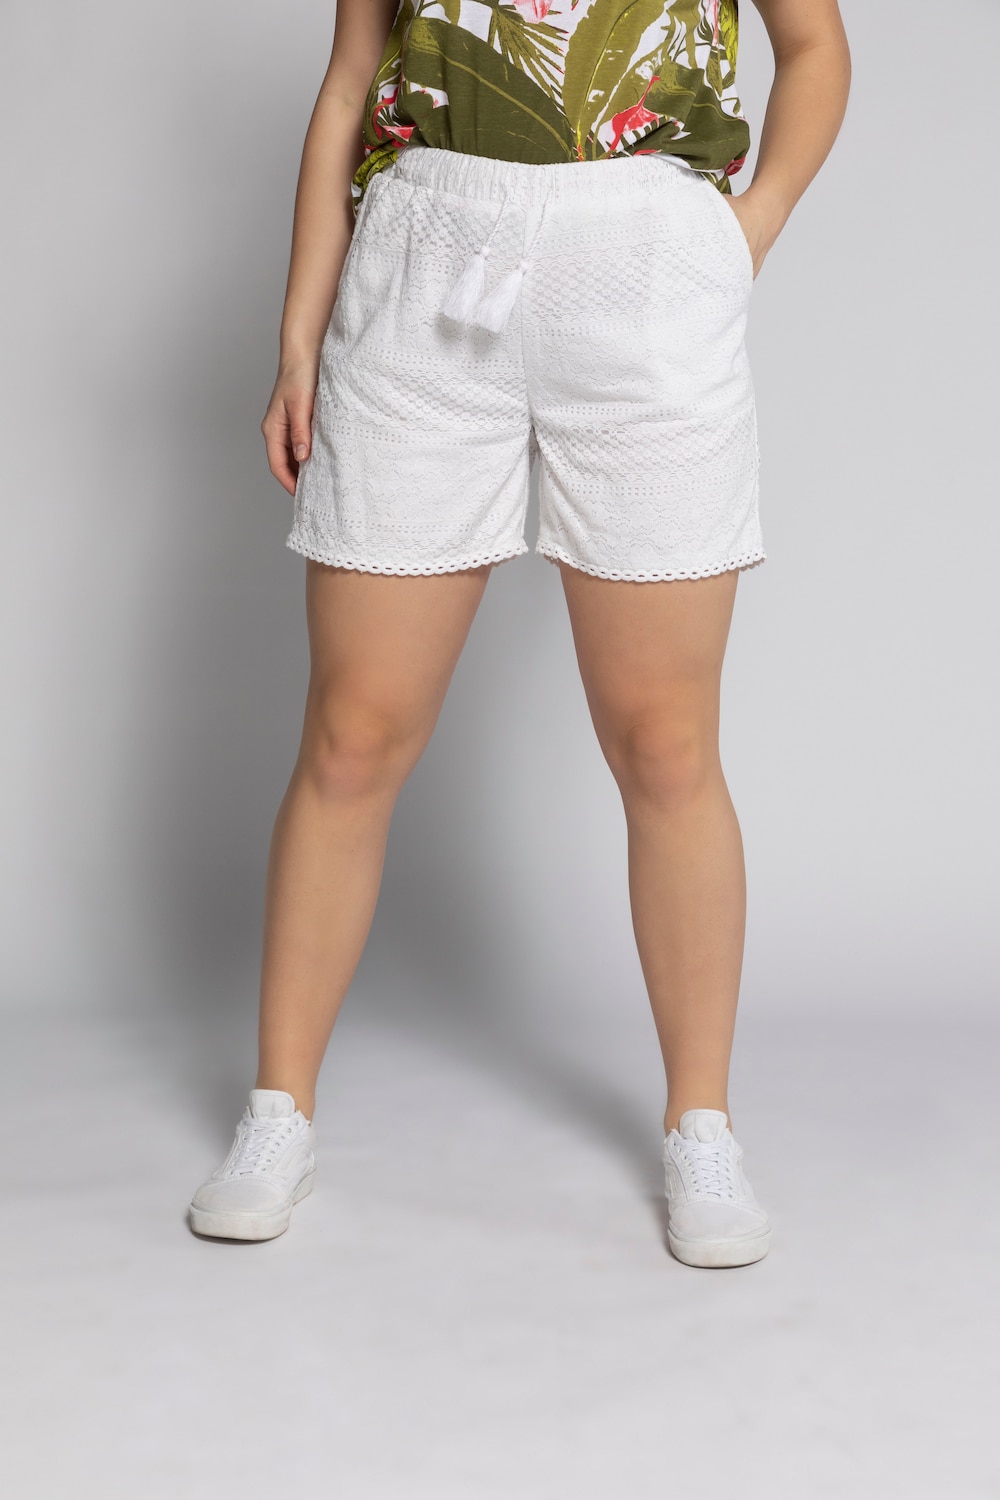 Grote Maten shorts, Dames, wit, Maat: 54, Polyester, Studio Untold